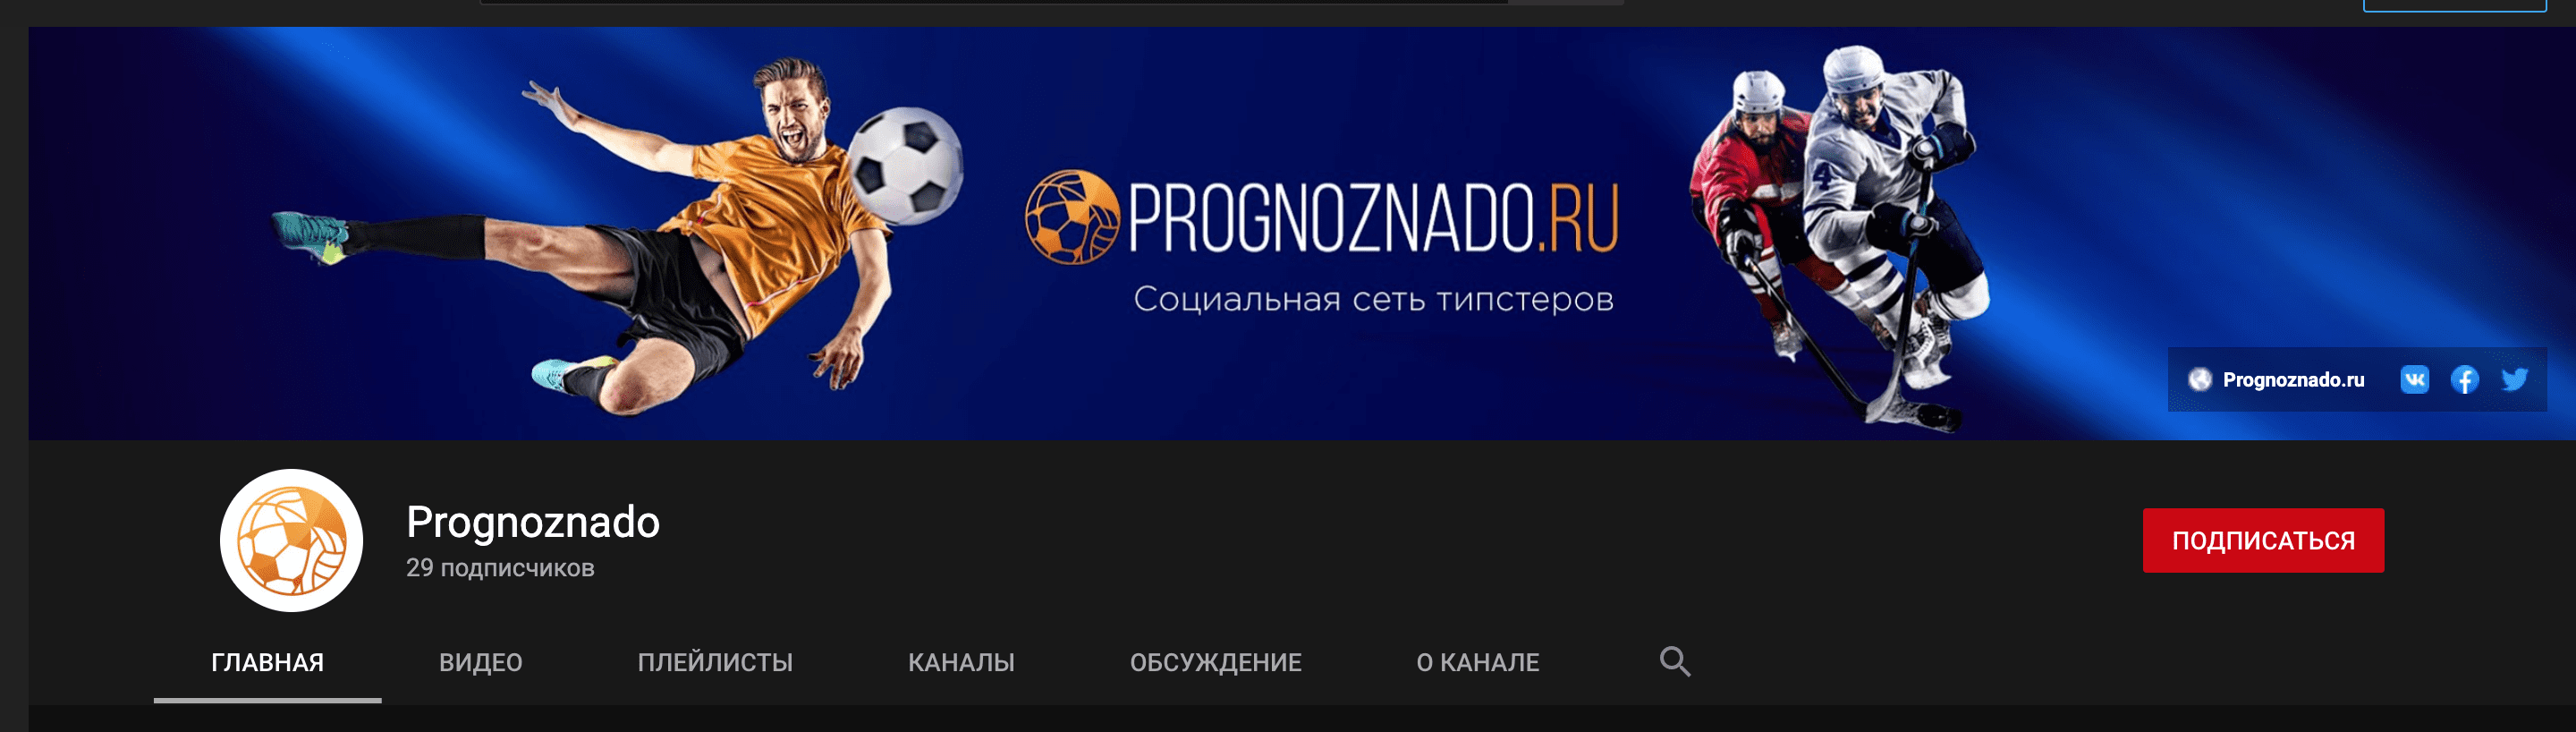 Ютуб канал Prognoznado ru (ПрогнозНадо ру)